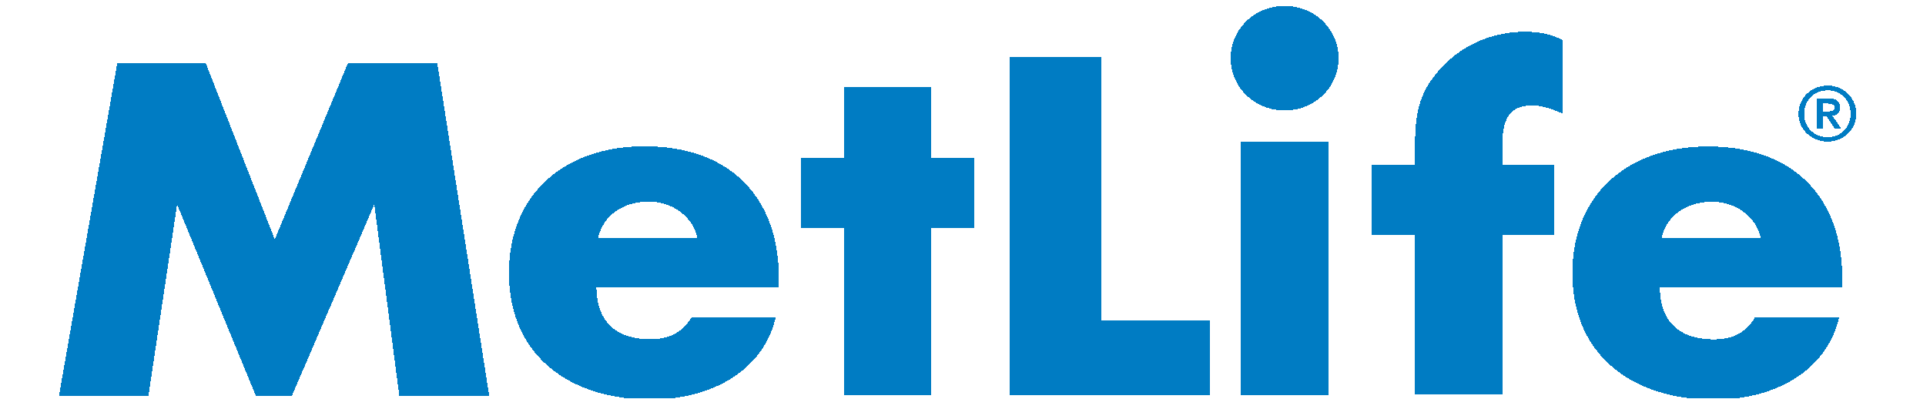 Logos-MetLife